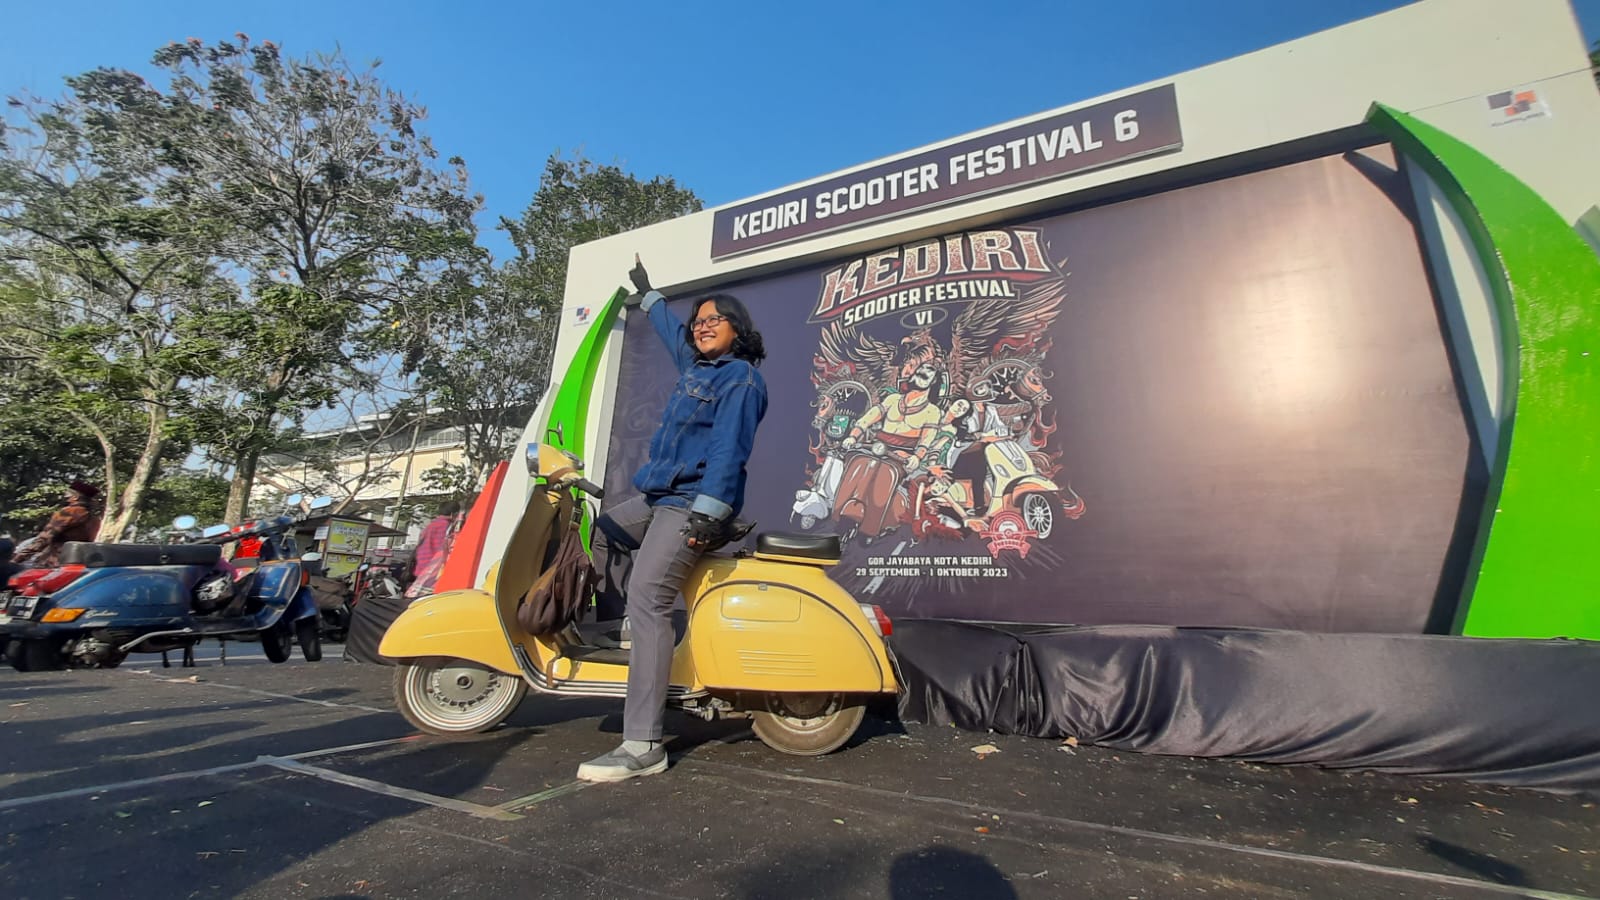 Kediri Scooter Festival